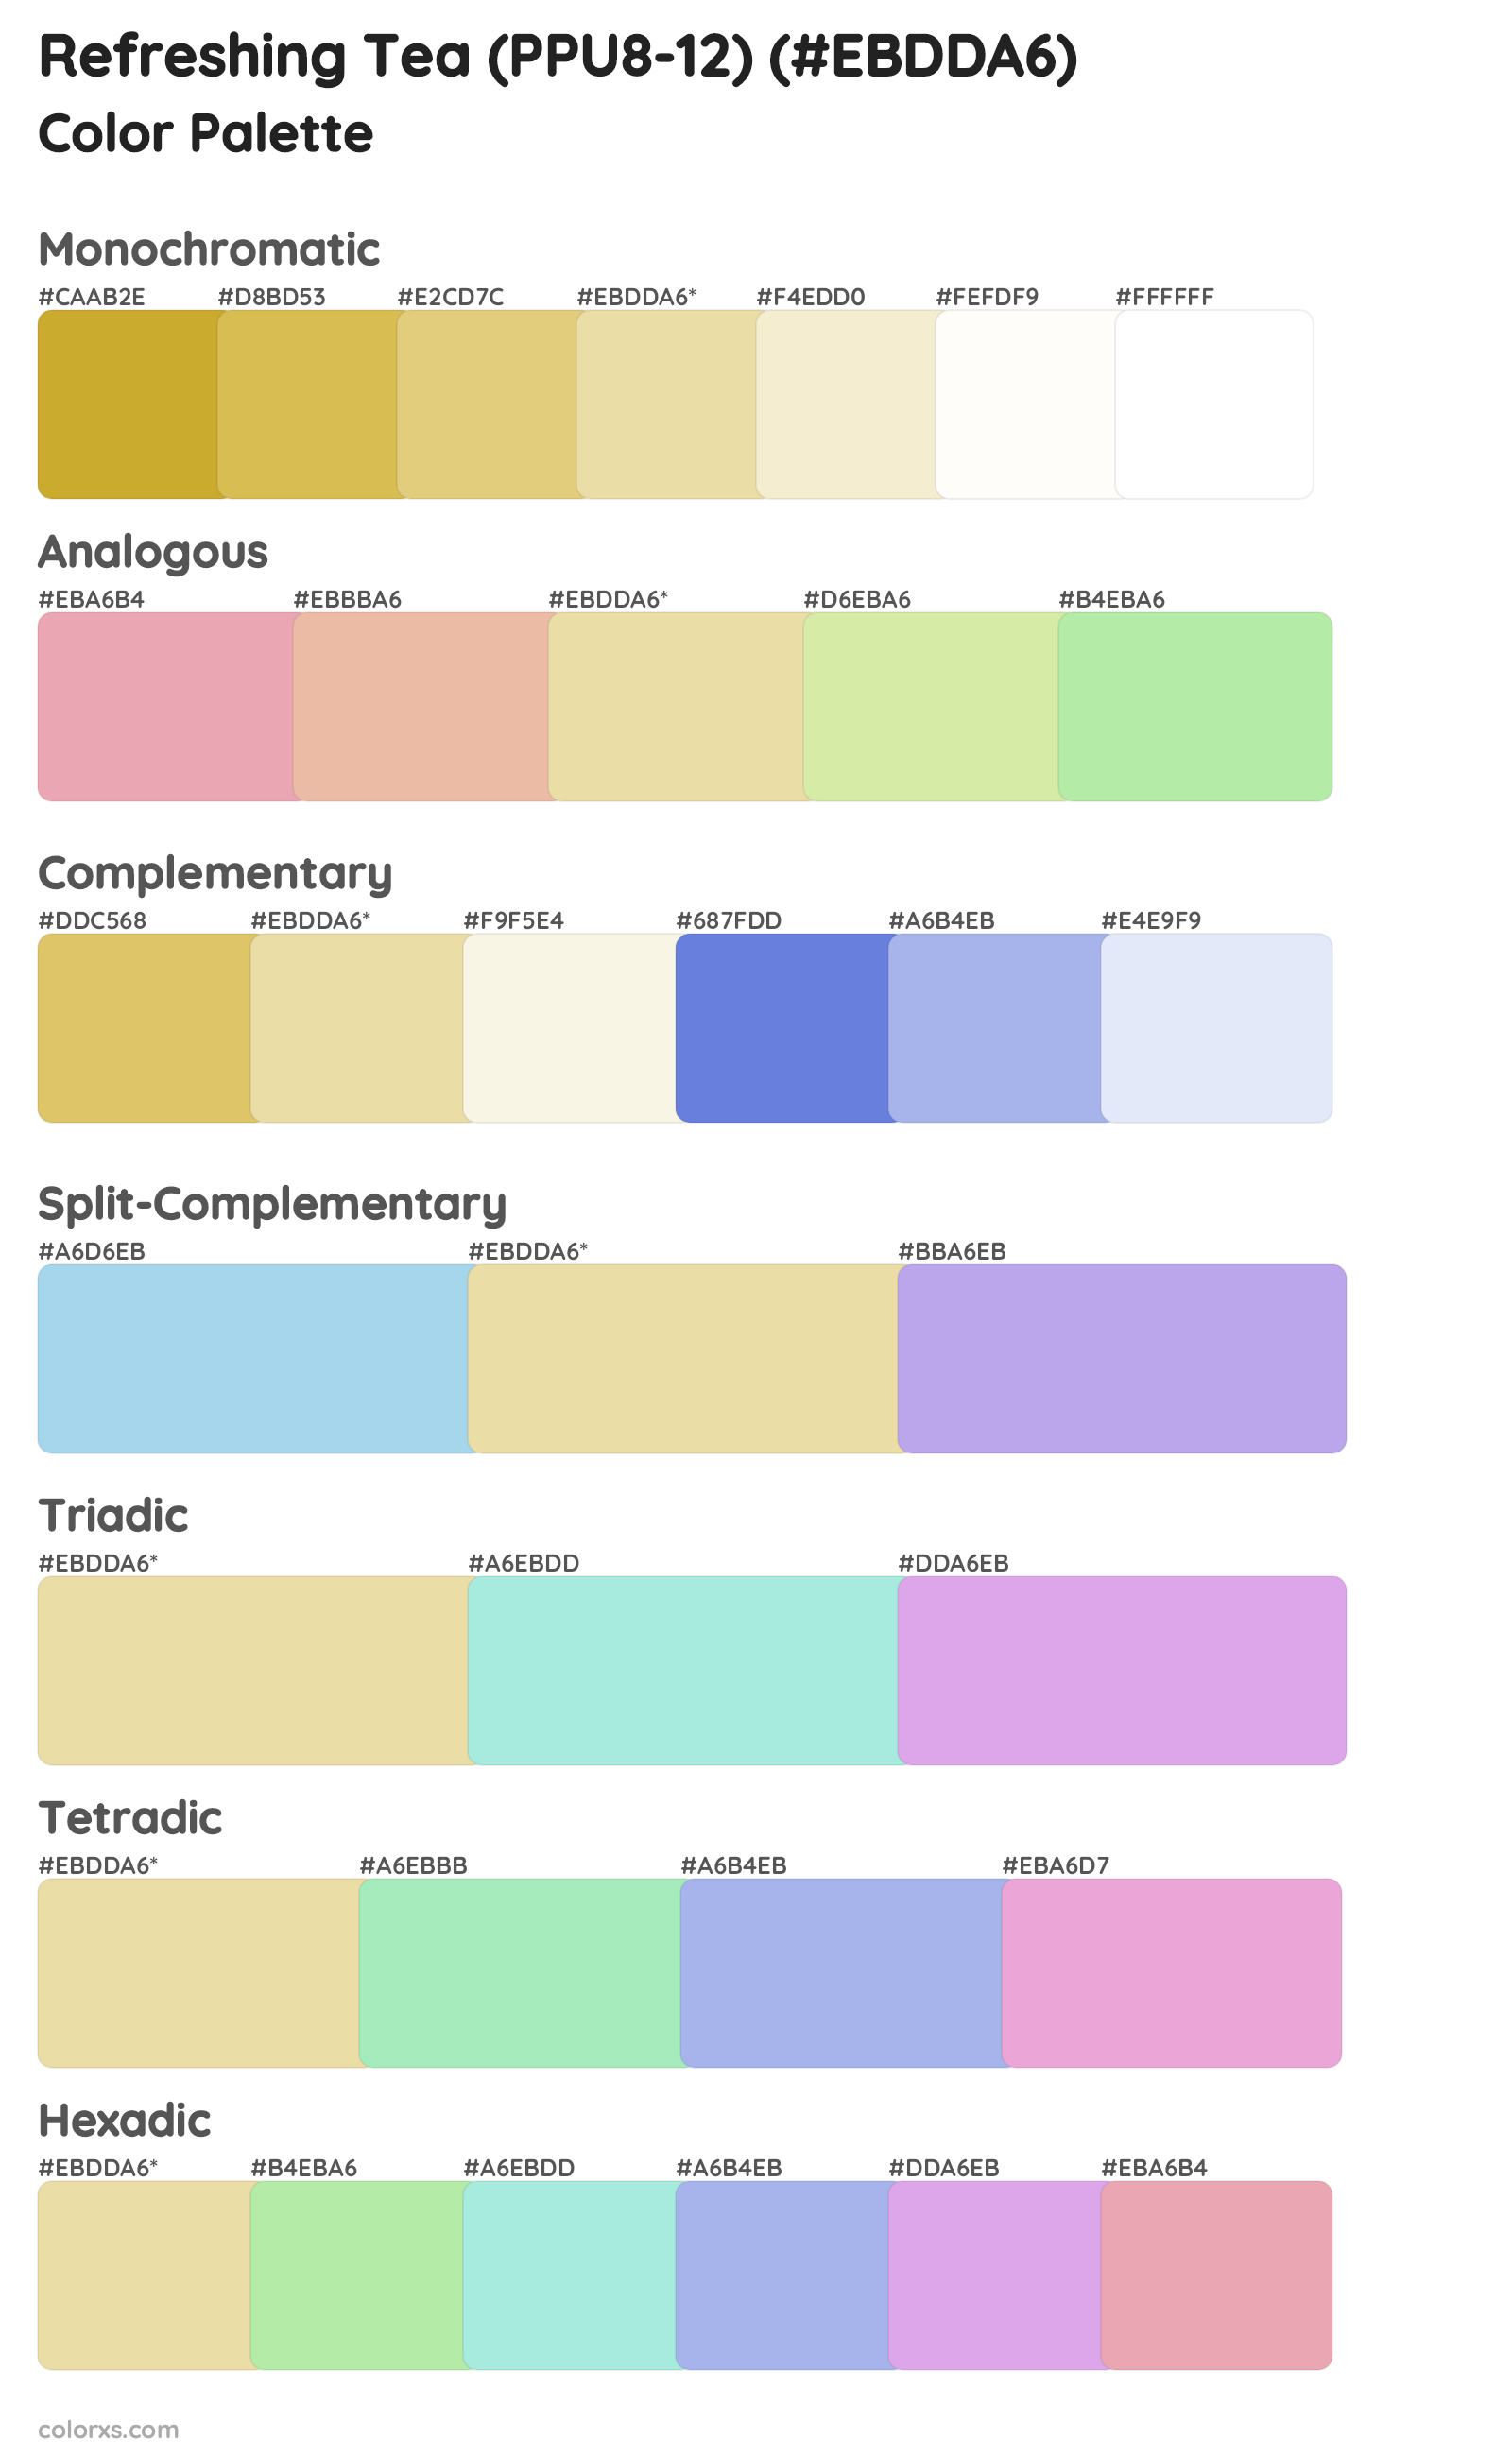 Refreshing Tea (PPU8-12) Color Scheme Palettes